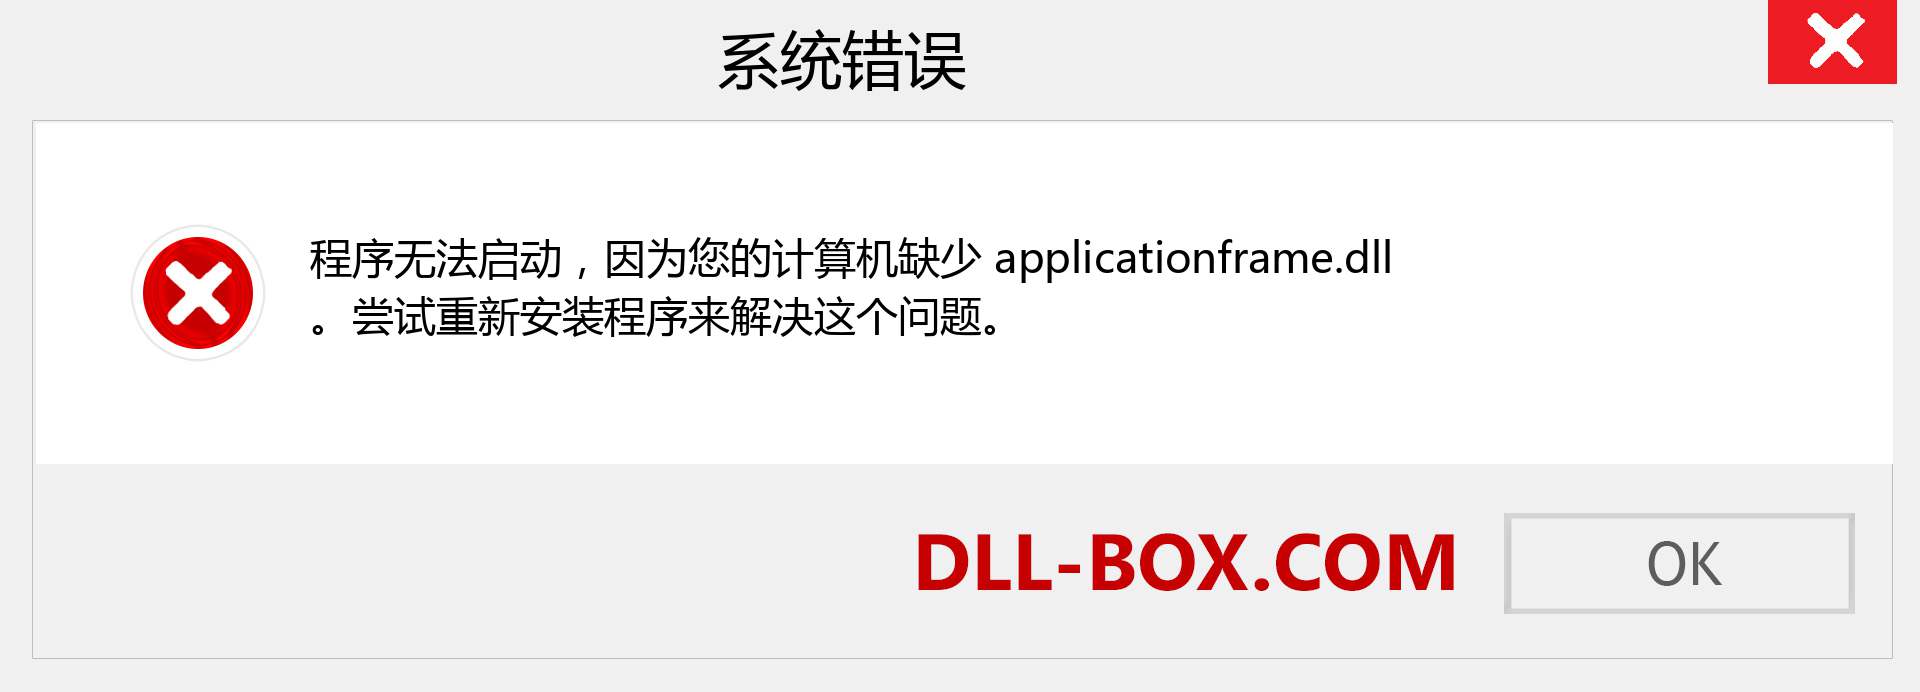 applicationframe.dll 文件丢失？。 适用于 Windows 7、8、10 的下载 - 修复 Windows、照片、图像上的 applicationframe dll 丢失错误